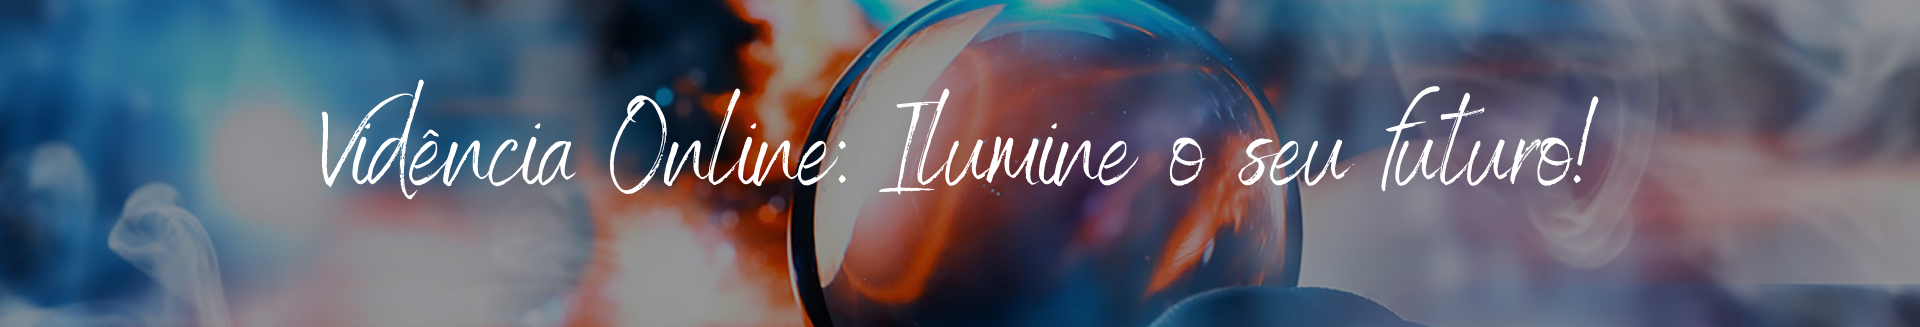 Vidência Online: Ilumine o seu futuro!